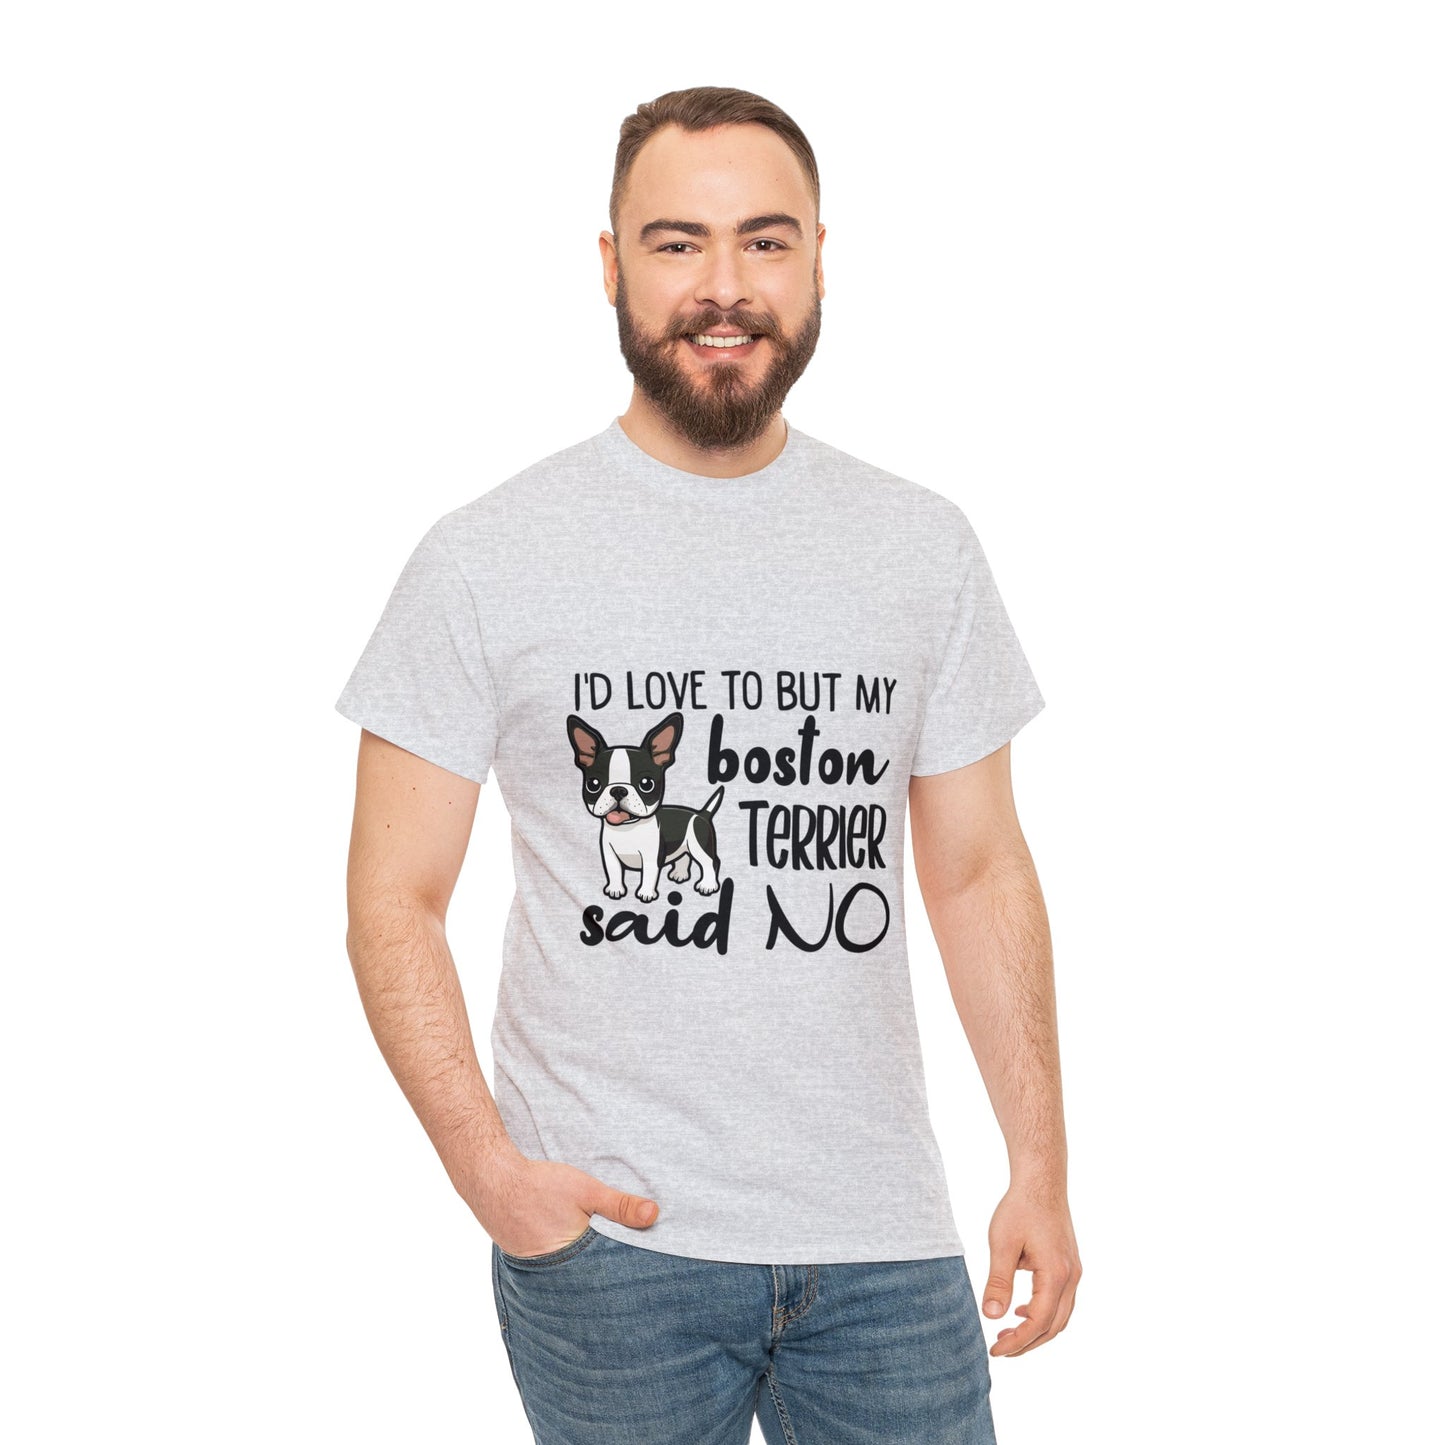 Henry - Unisex Tshirts for Boston Terrier Lovers